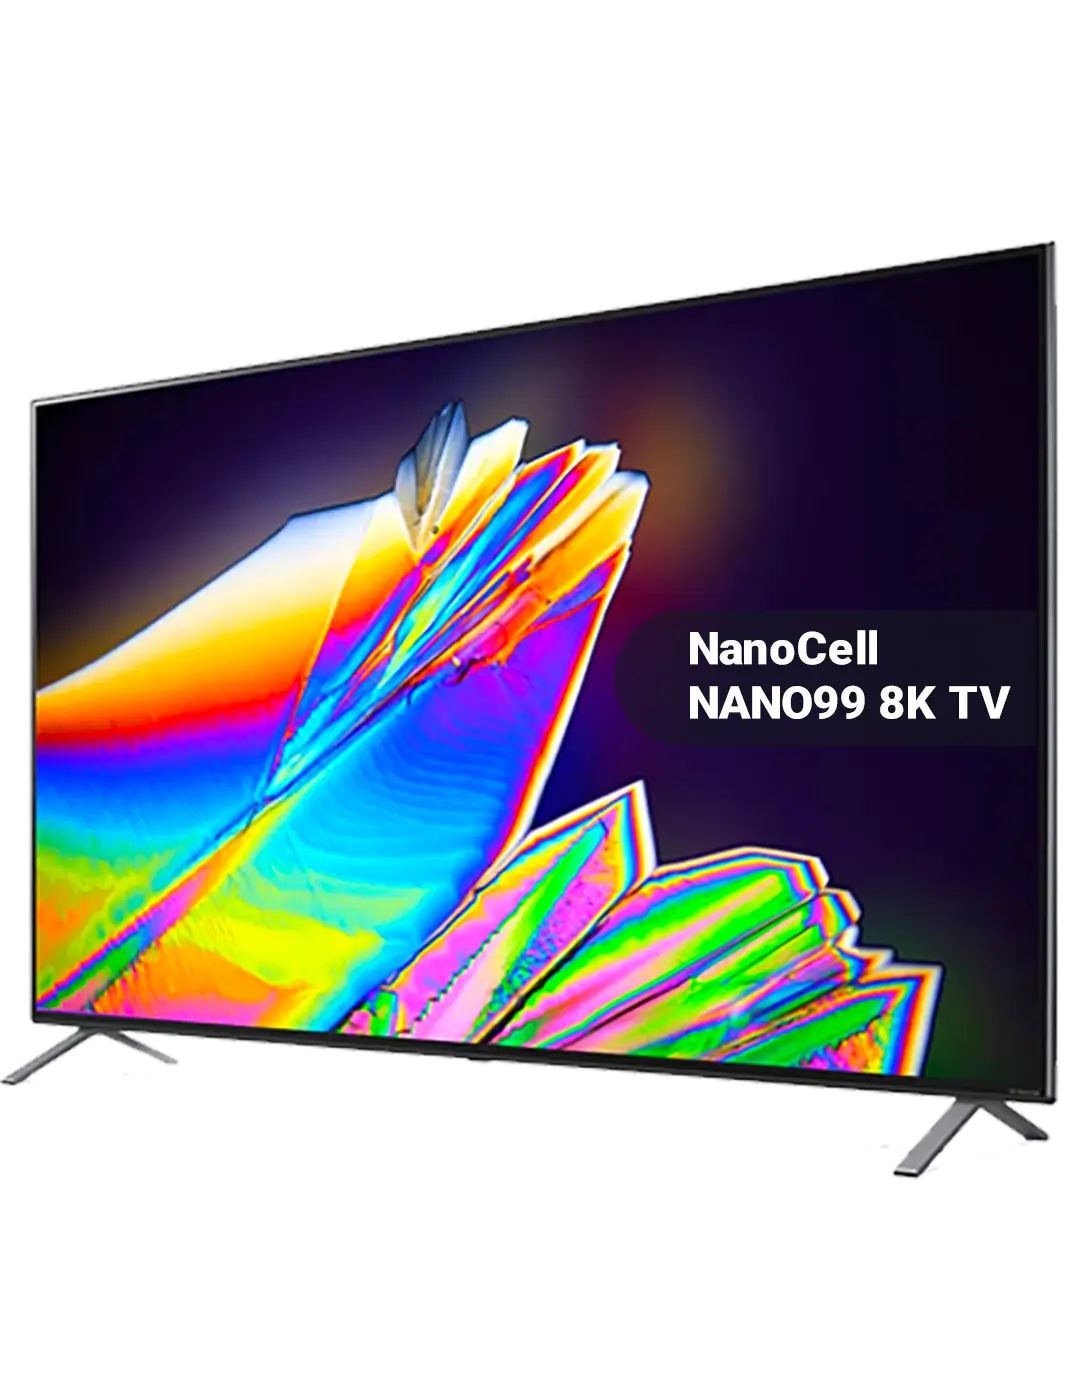 LG NanoCell NANO99 8K TV